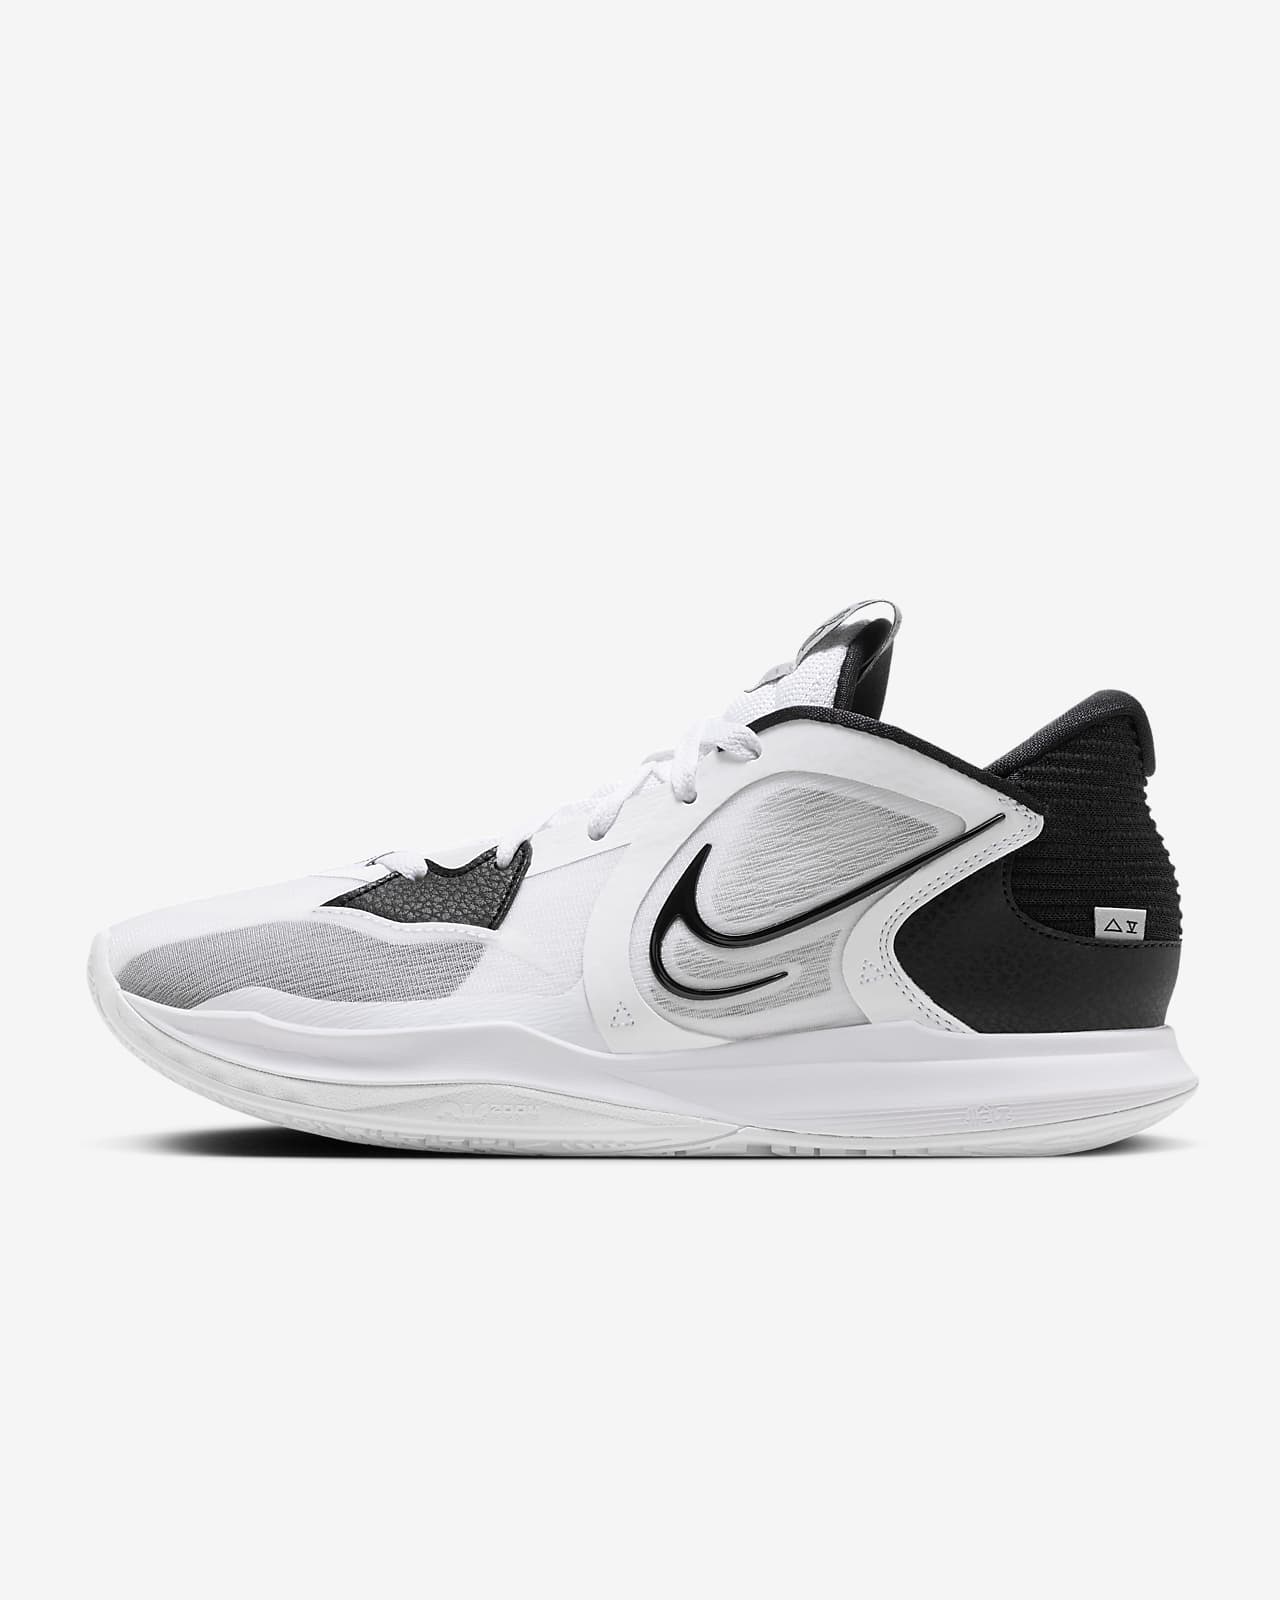 Obligar plato También Kyrie Low 5 EP Basketball Shoes. Nike PH